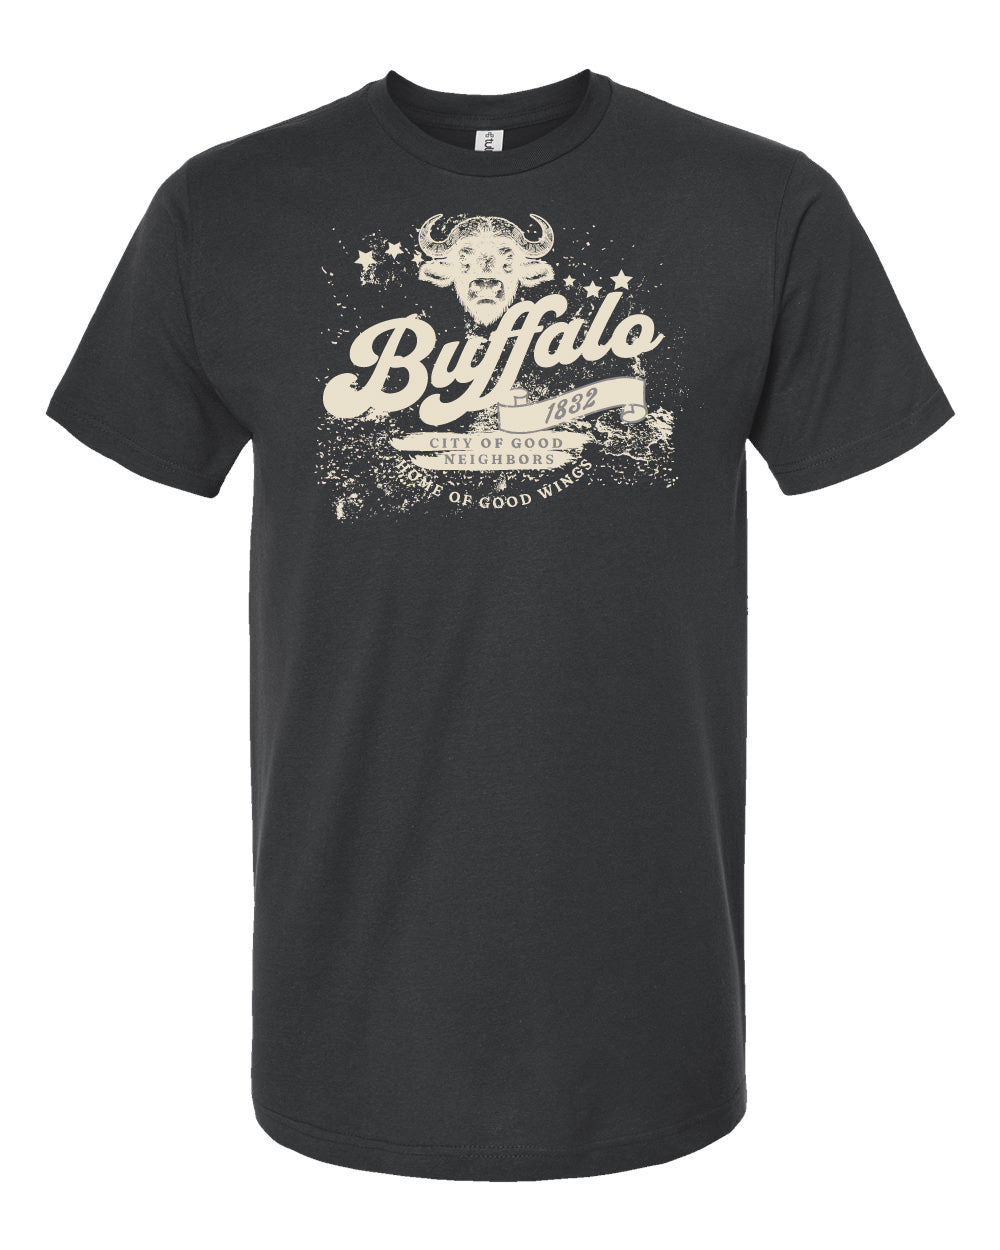 Buffalo city of good neighbors, Home of good wings T-shirt